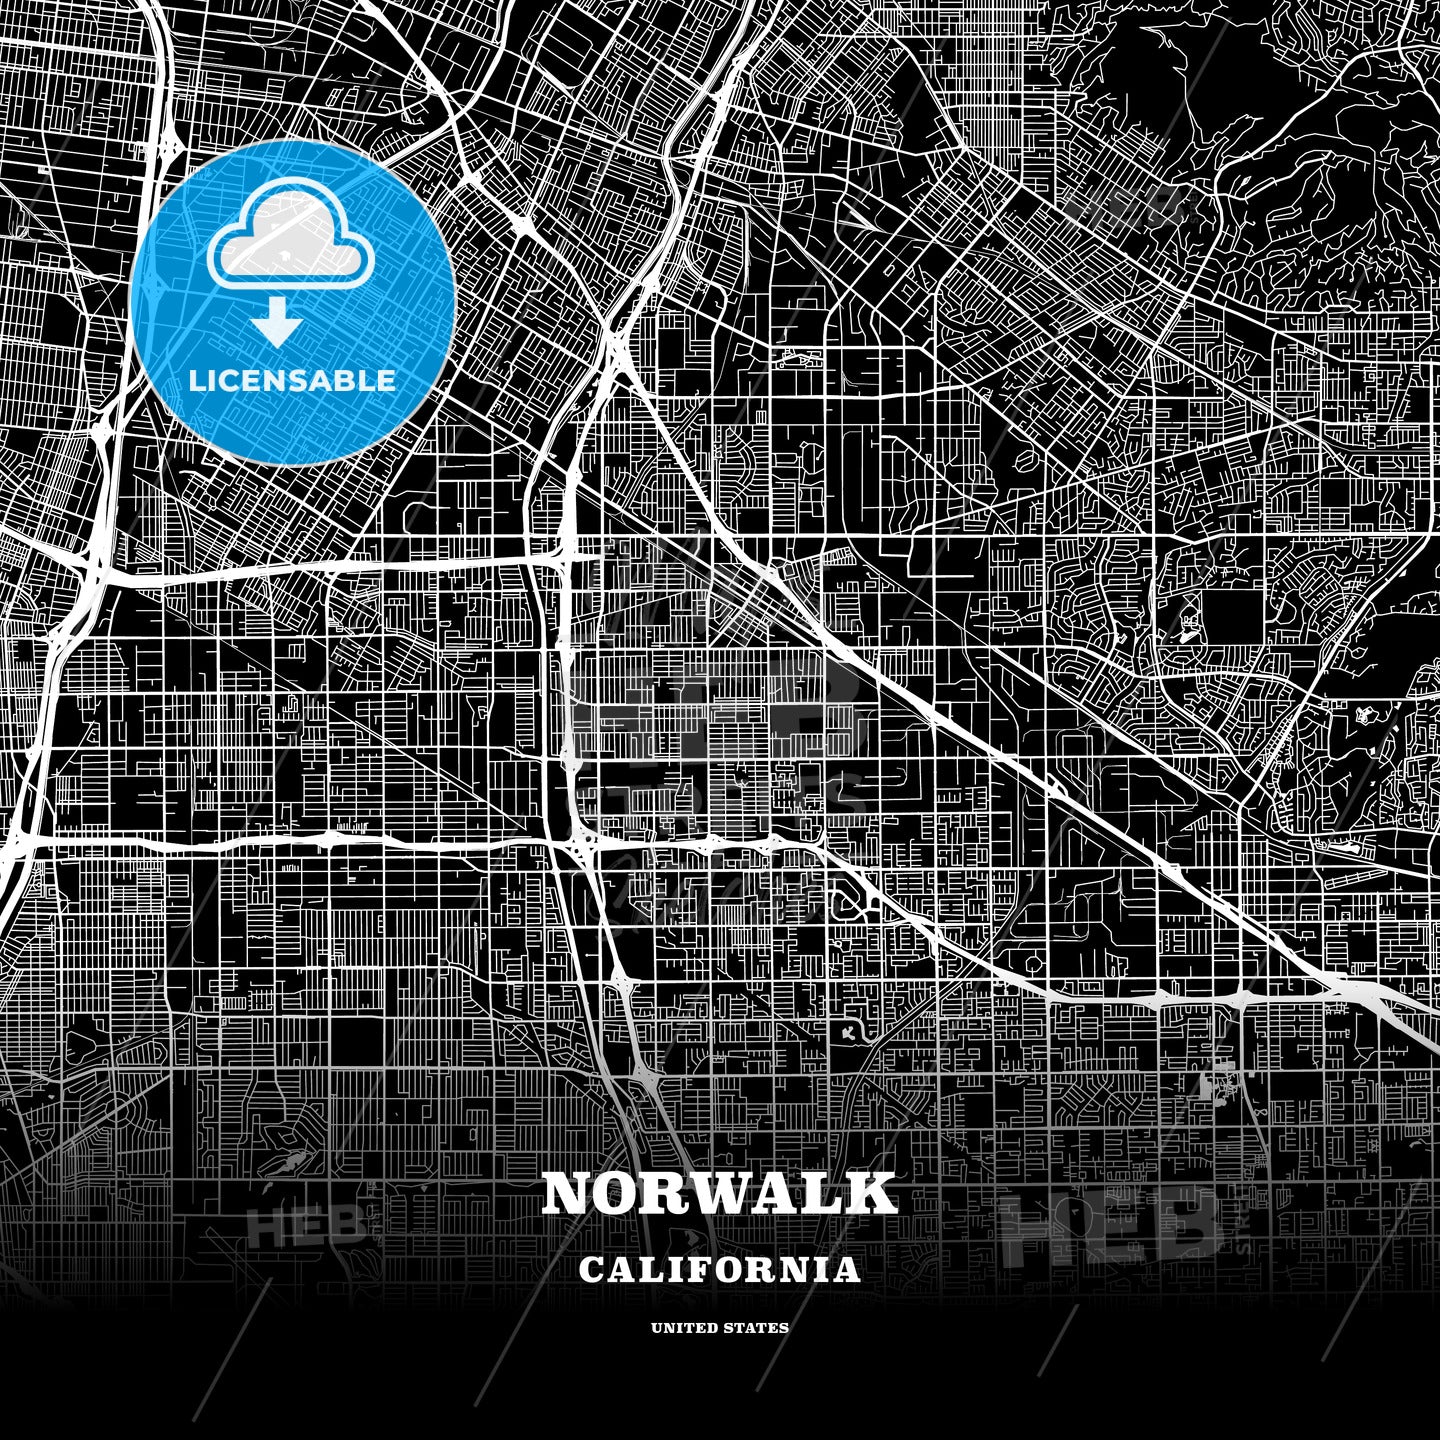 Norwalk, California, USA map